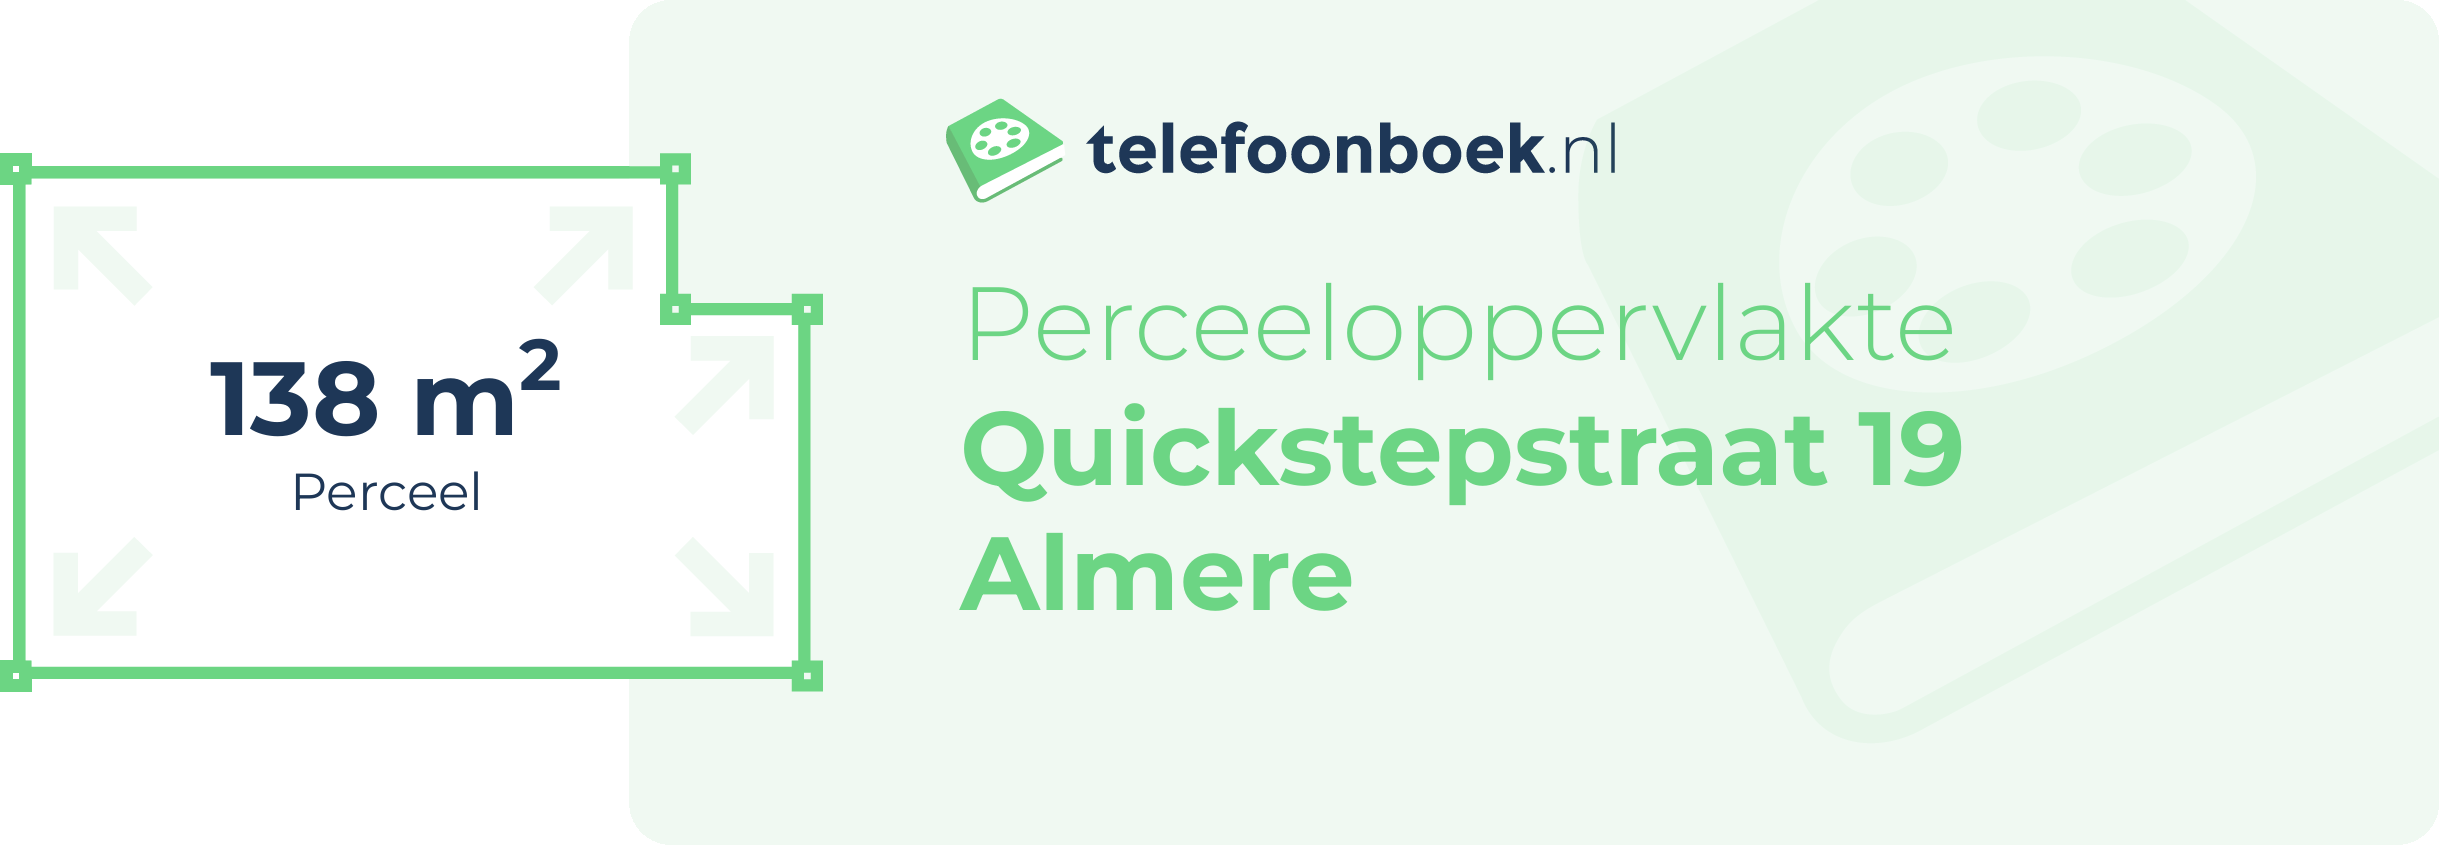 Perceeloppervlakte Quickstepstraat 19 Almere